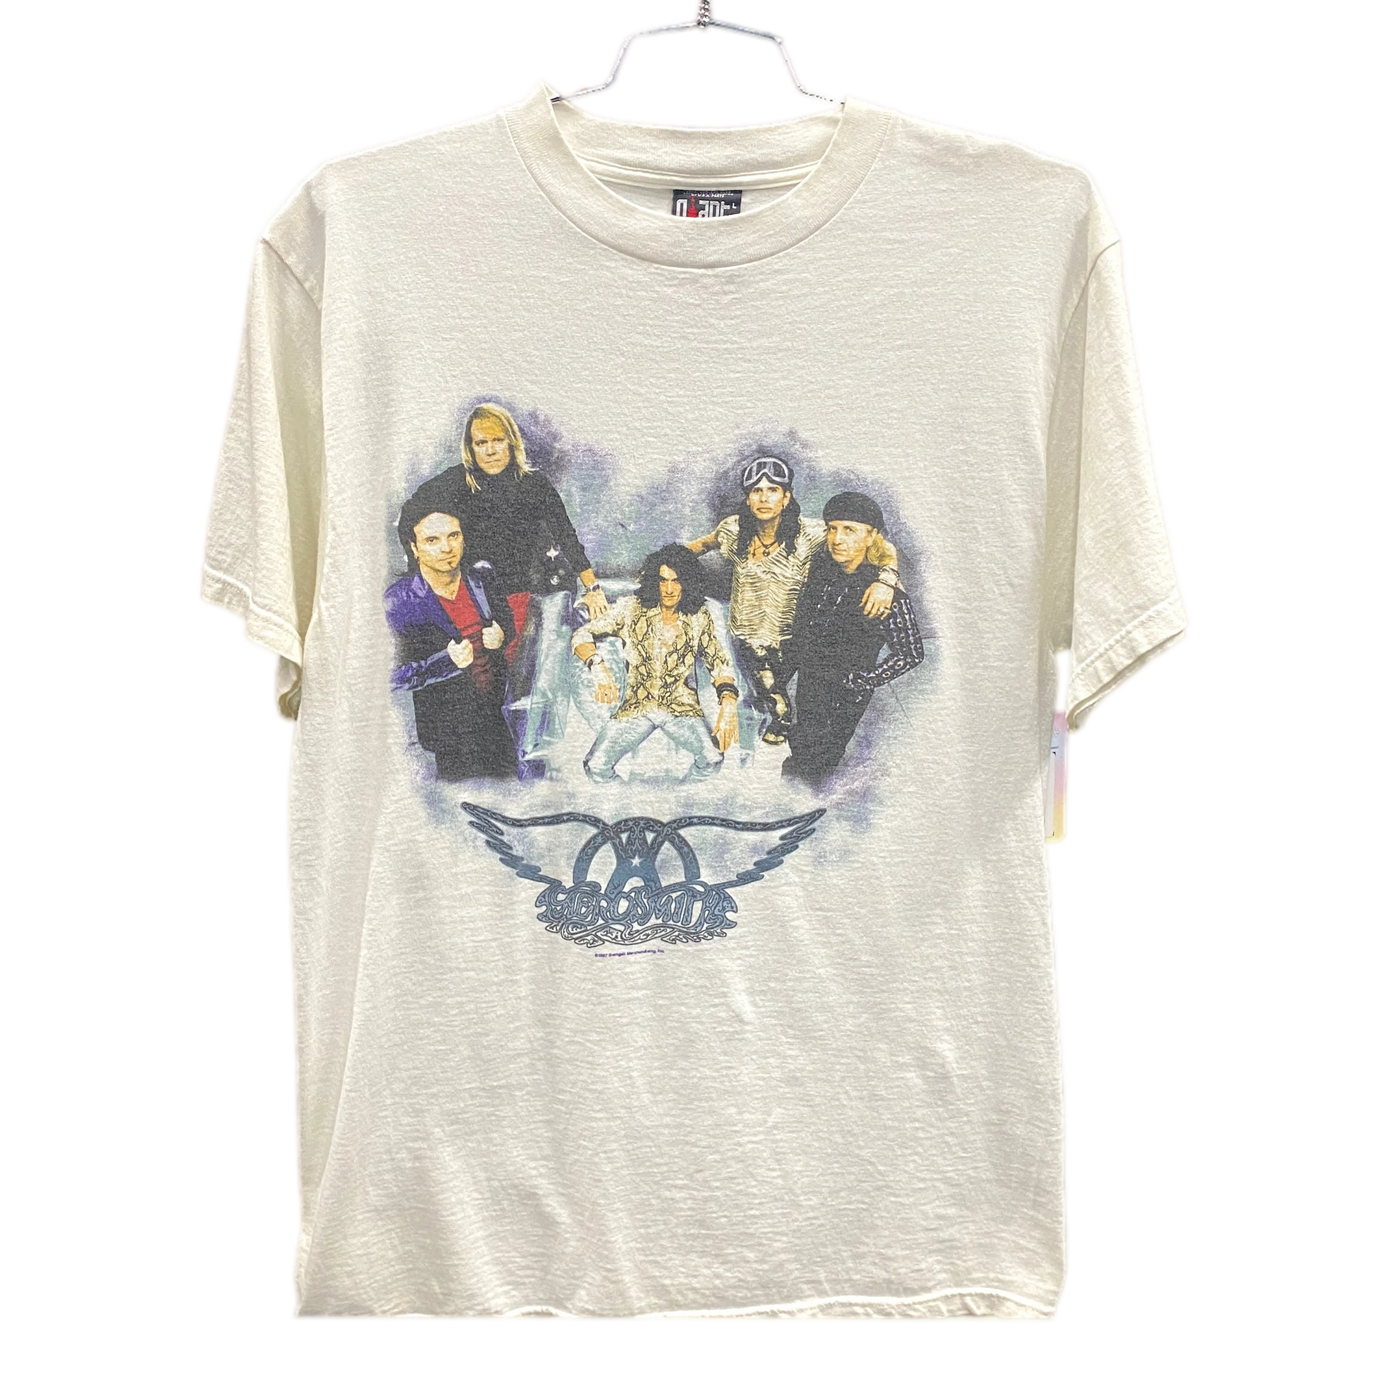 '97 Aerosmith Tour White Music T-shirt sz L